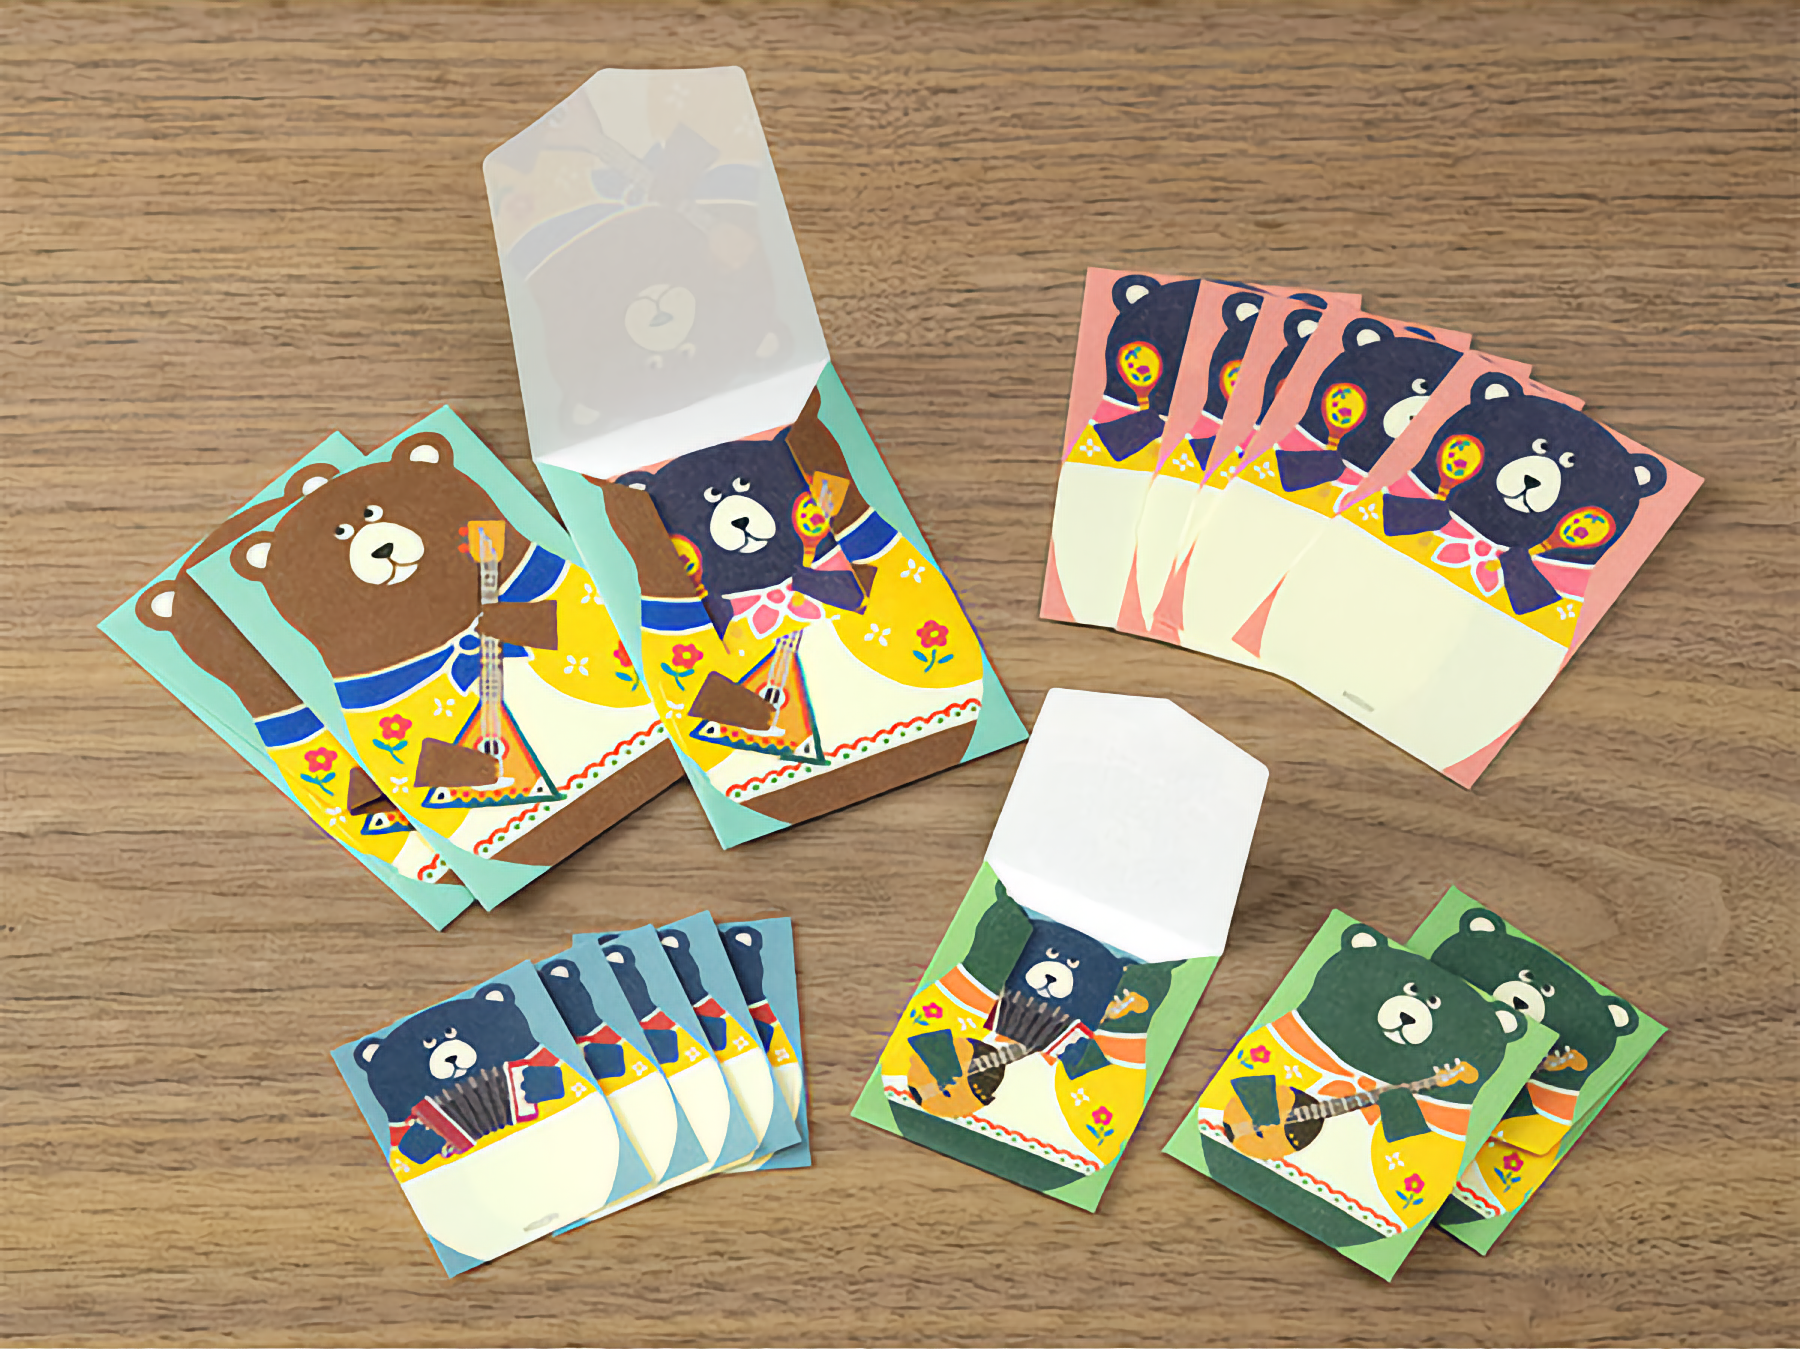 Midori Matryoshka Bear Mini Letter Set